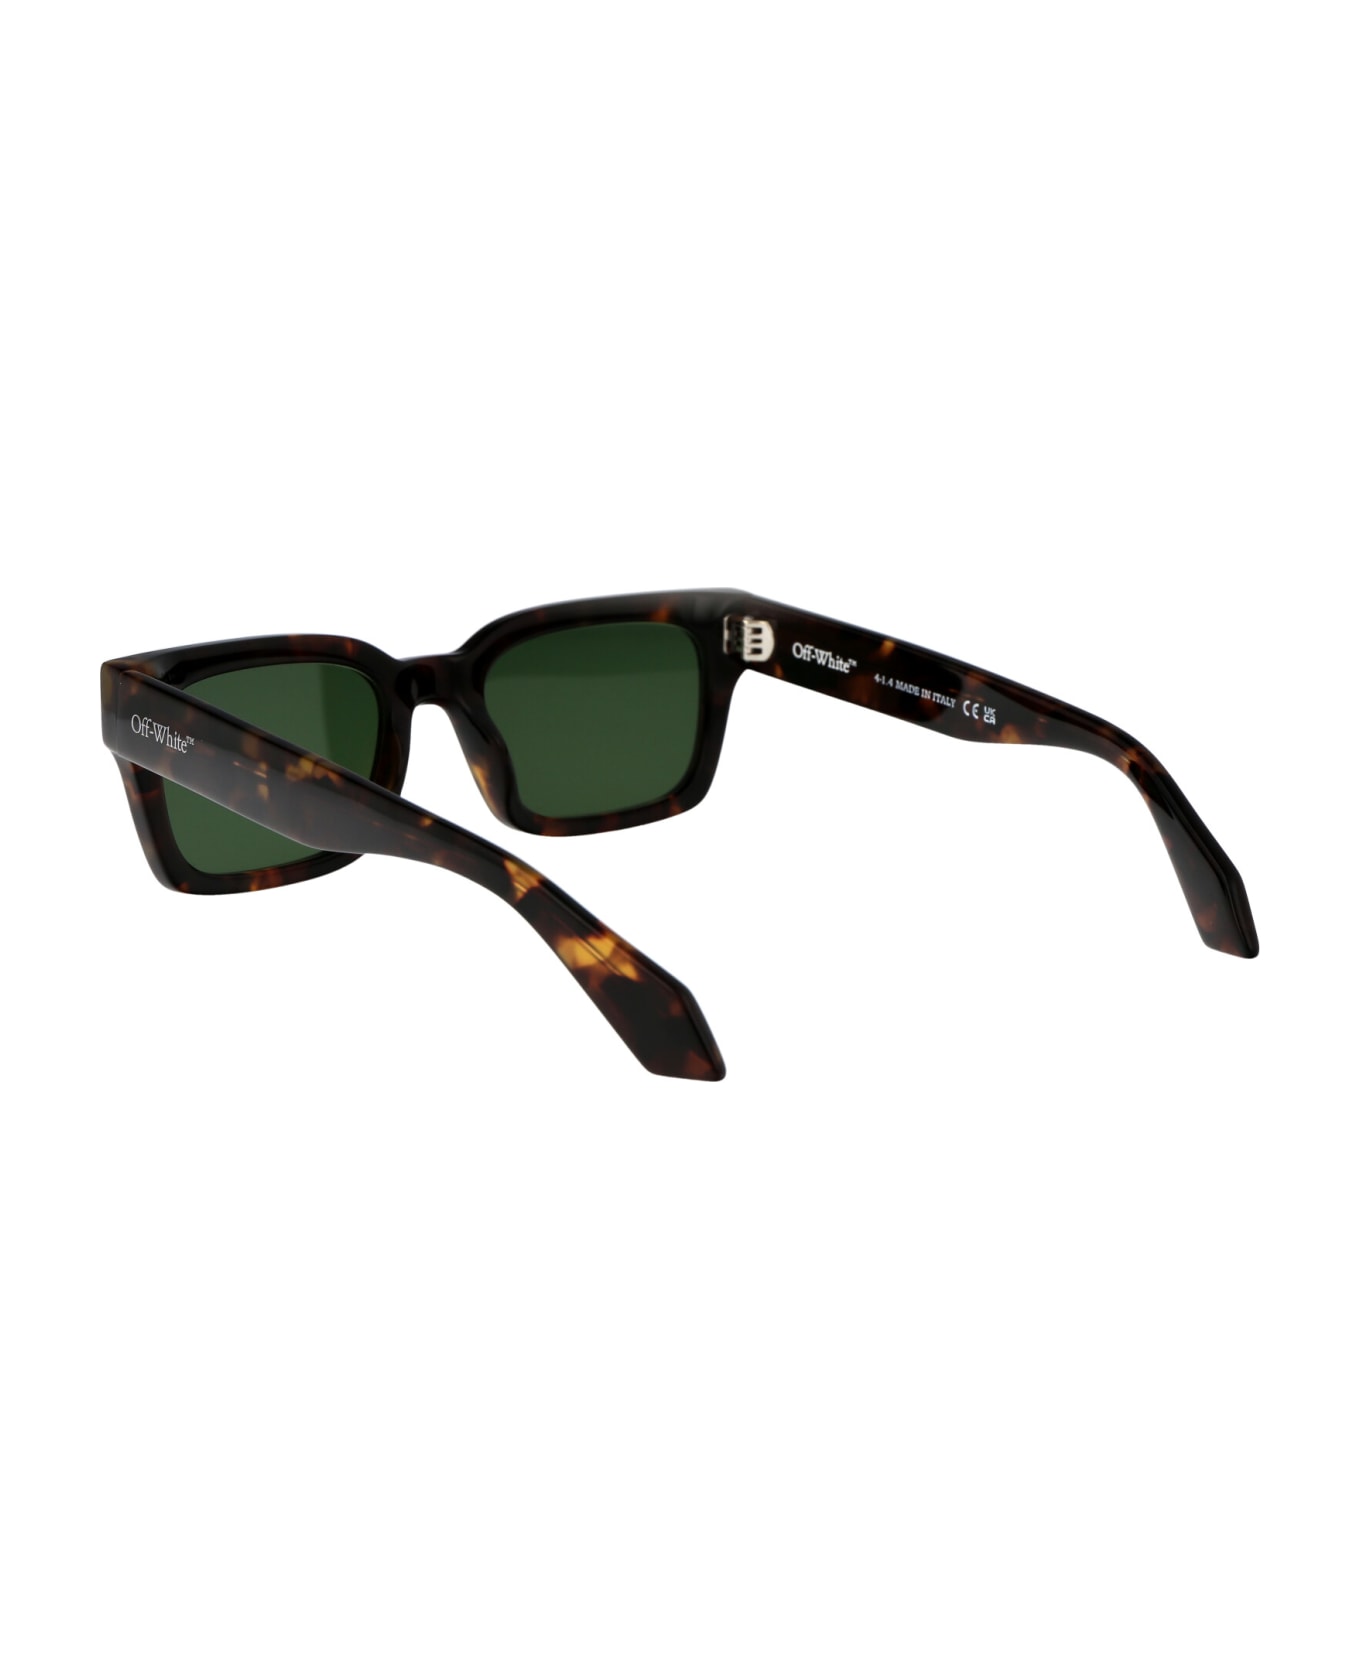 Off-White Midland Sunglasses - 6055 HAVANA